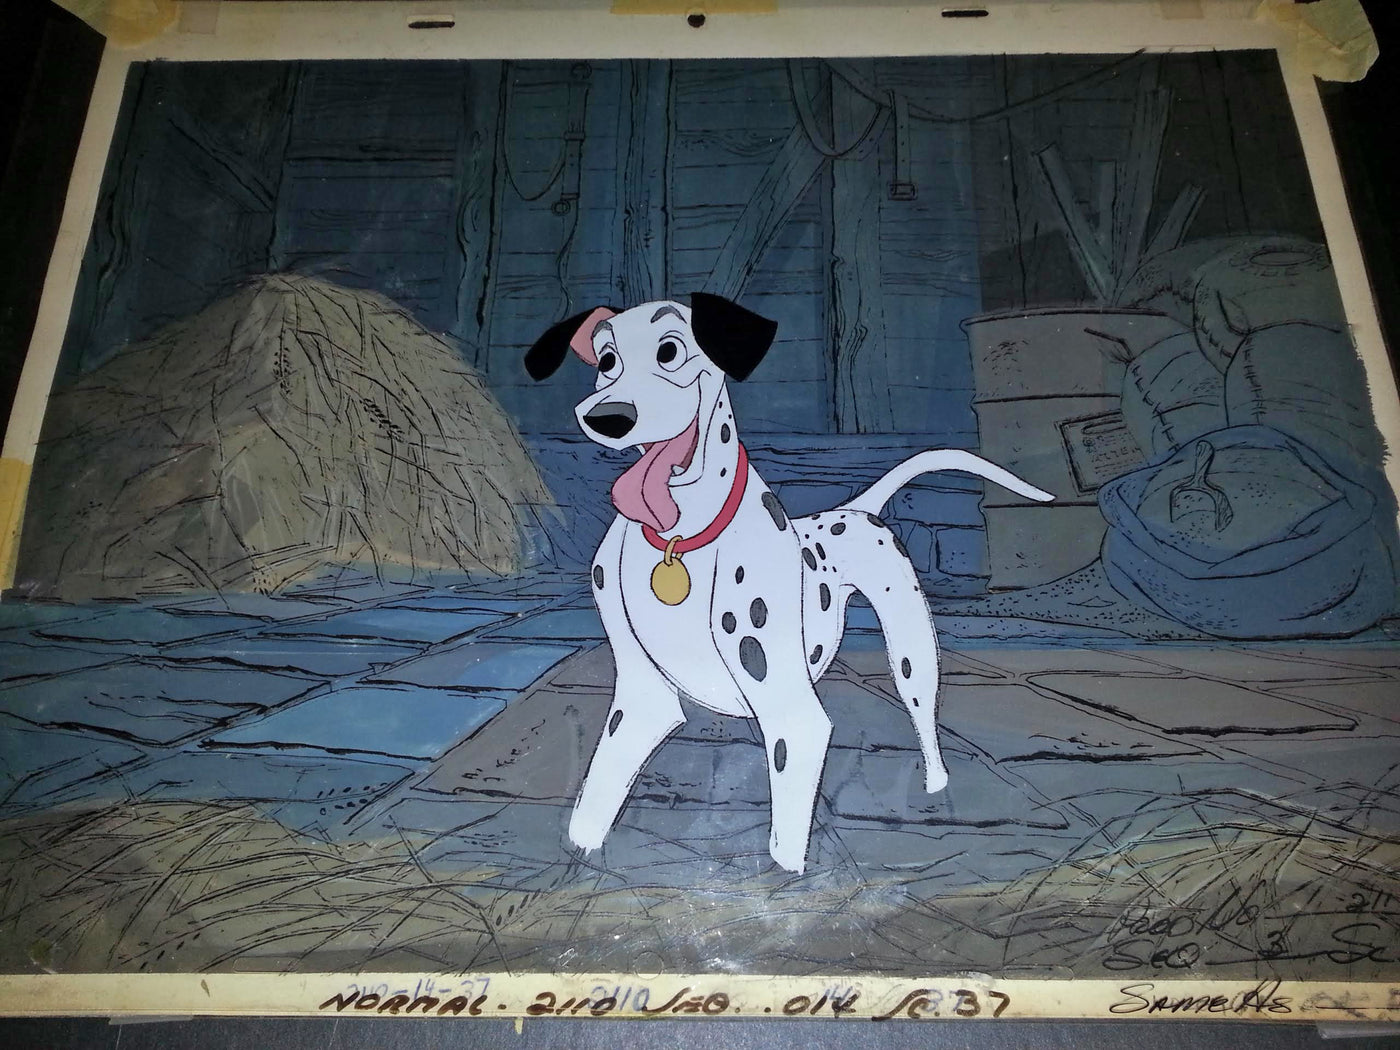 Original Walt Disney Production Cel on Production Background from 101 Dalmatians featuring Pongo